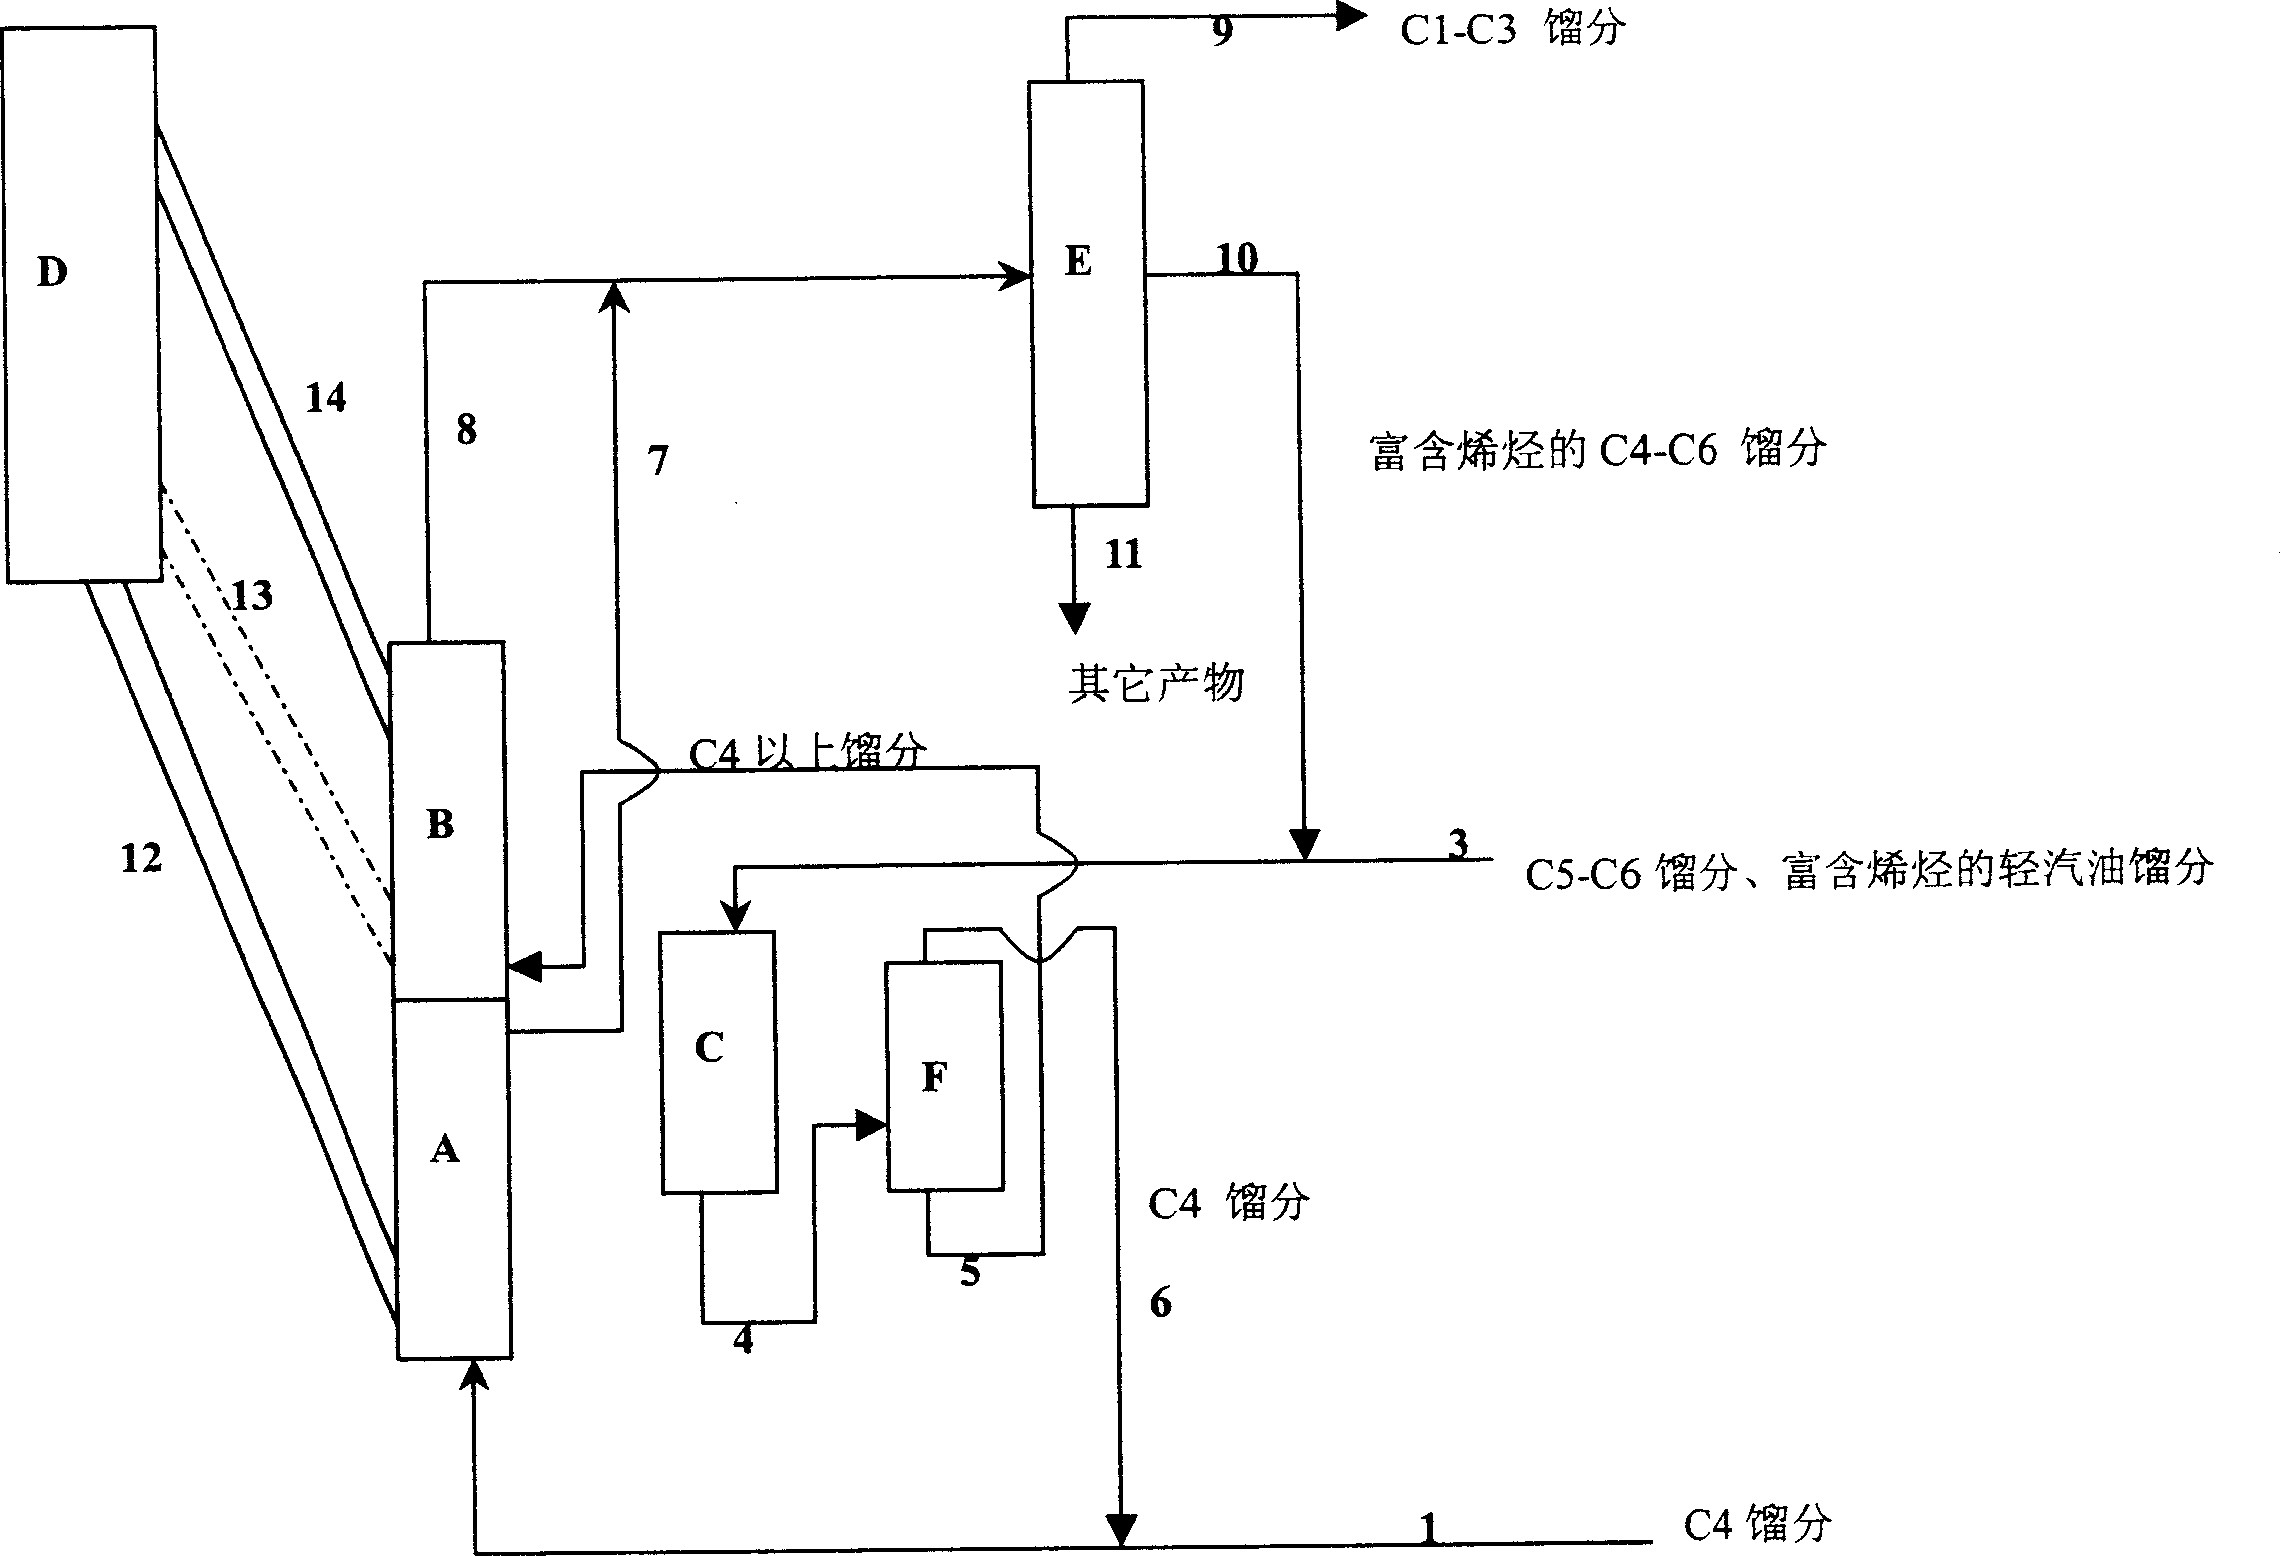 Catalytic conversion method for preparing light olefins by using C4-C6 distillates